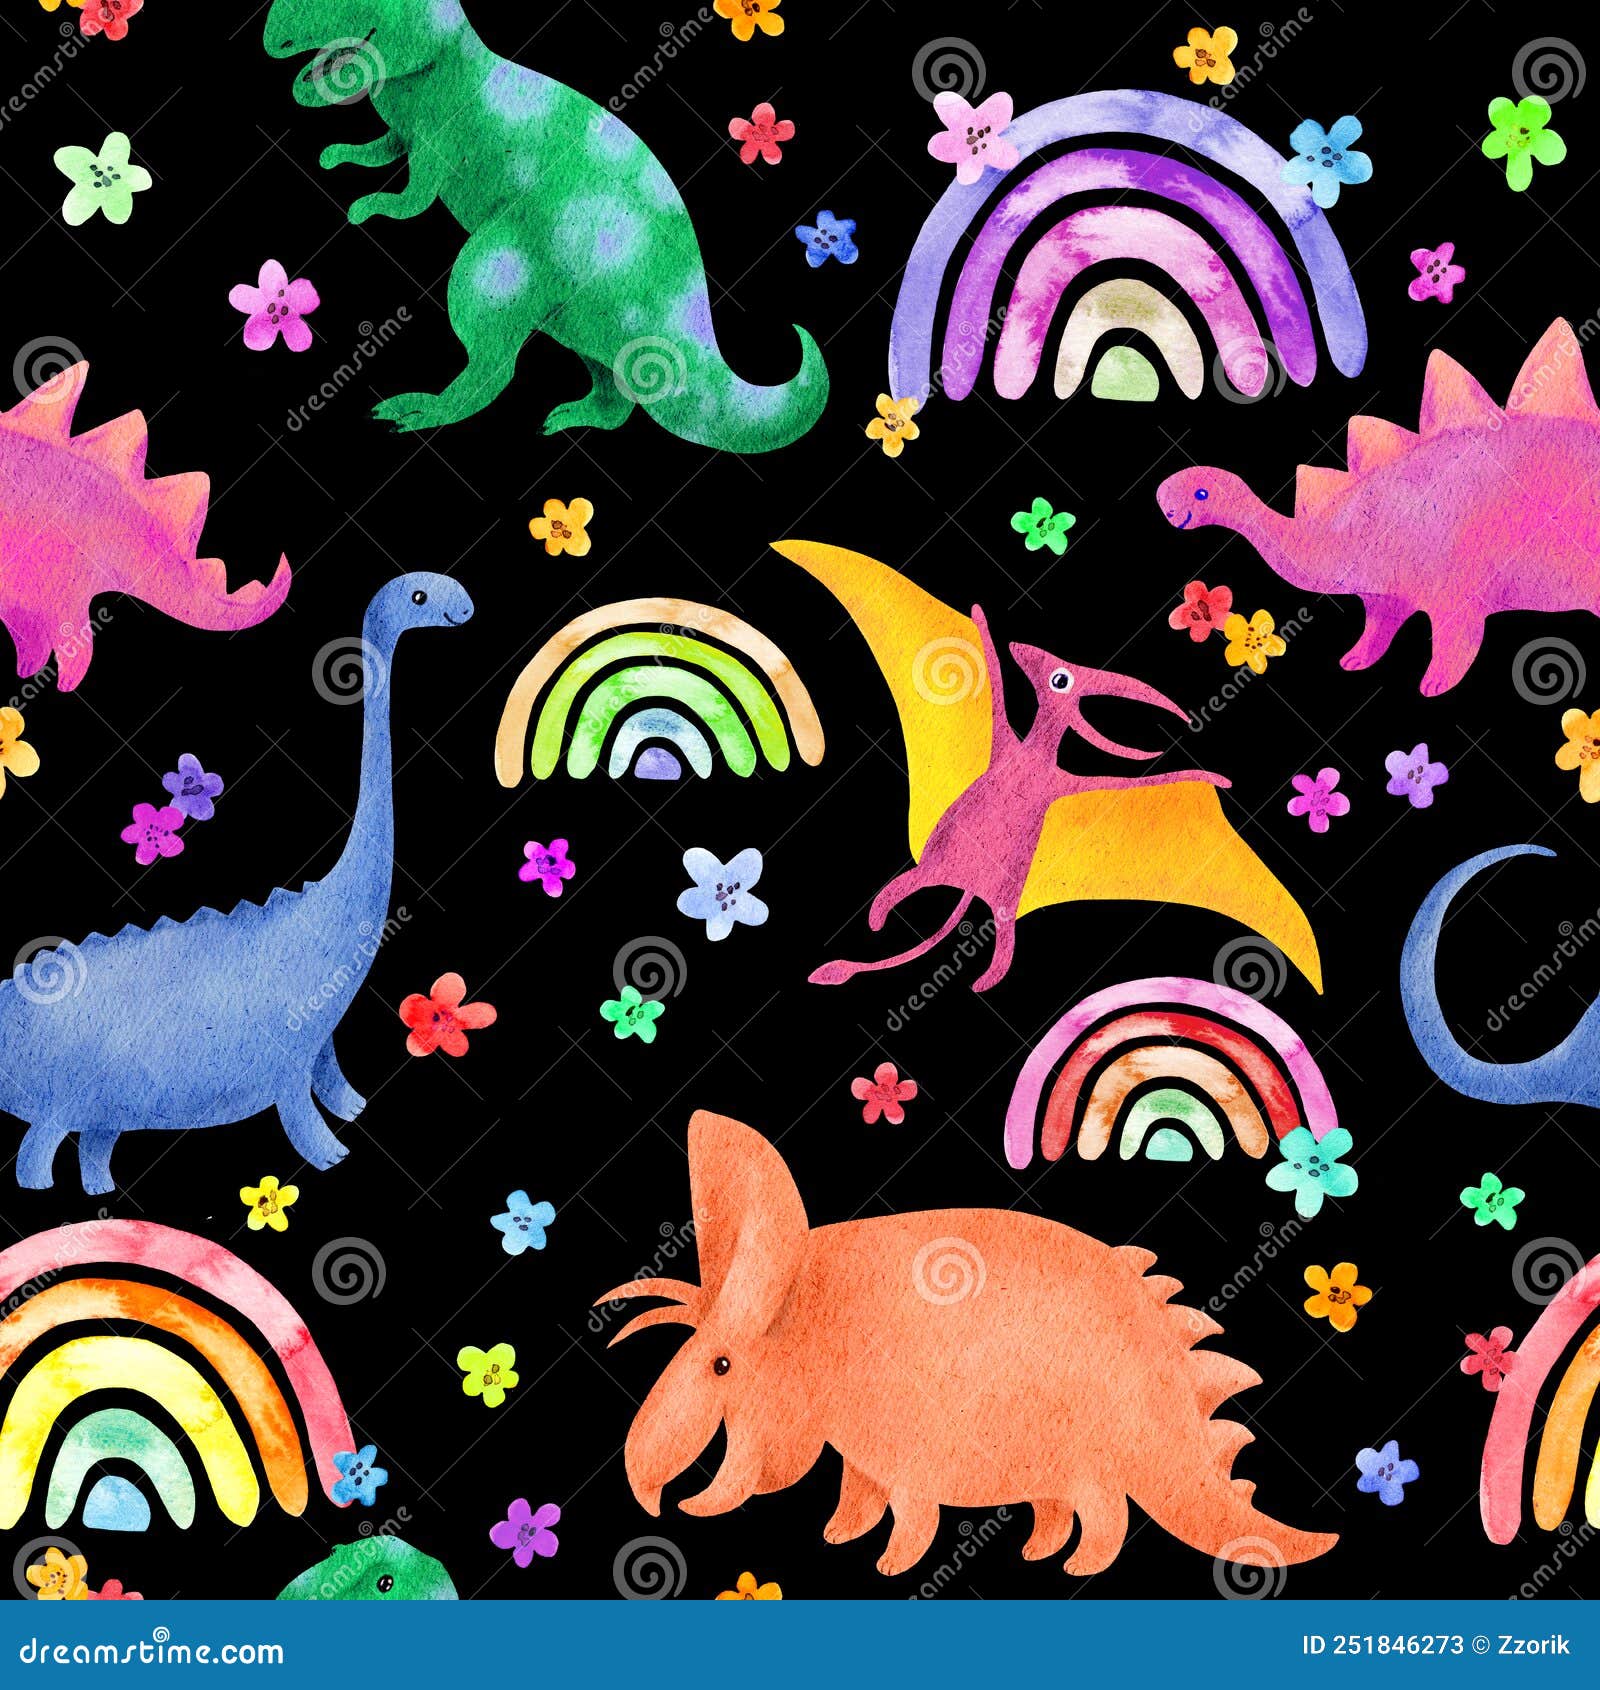 dinosaur, rainbows, flowers seamless pattern. cute happy dino for kids . watercolor prehistory animals repeating